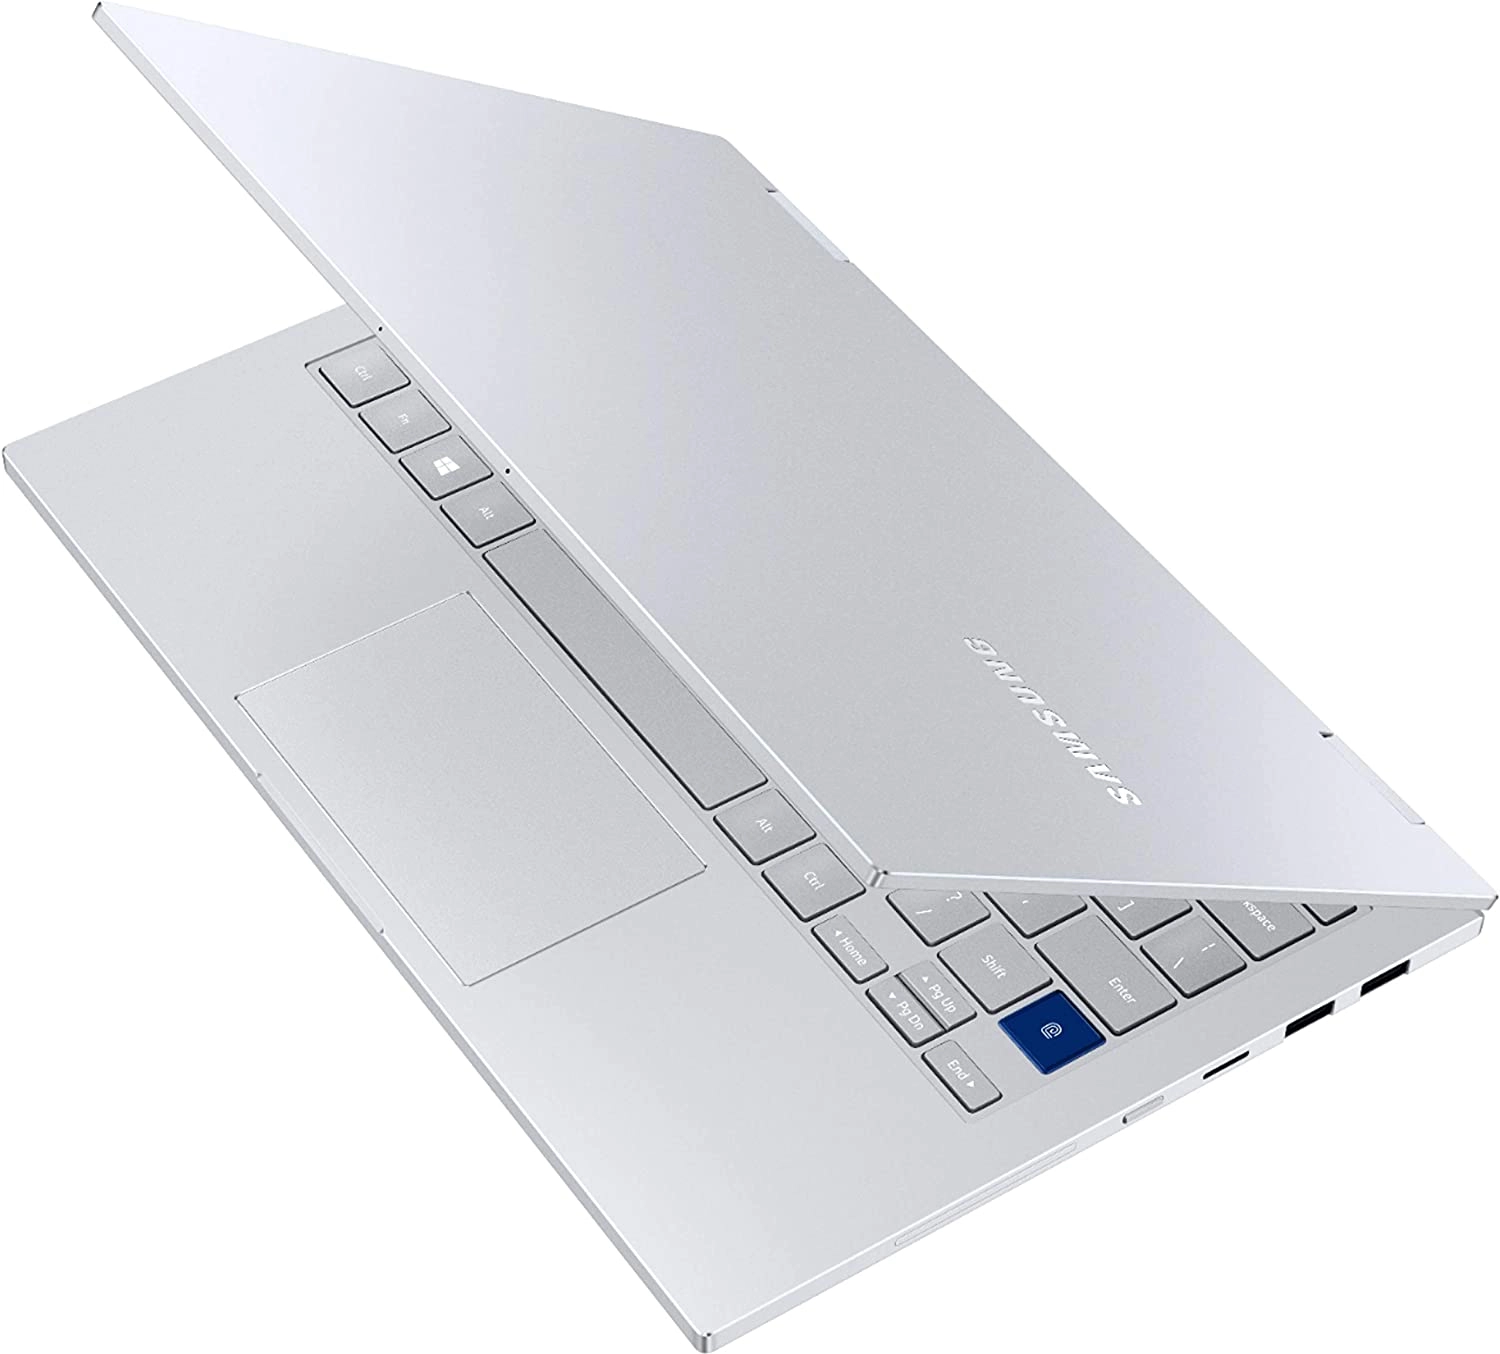 Samsung Galaxy Book Flex Alpha laptop image